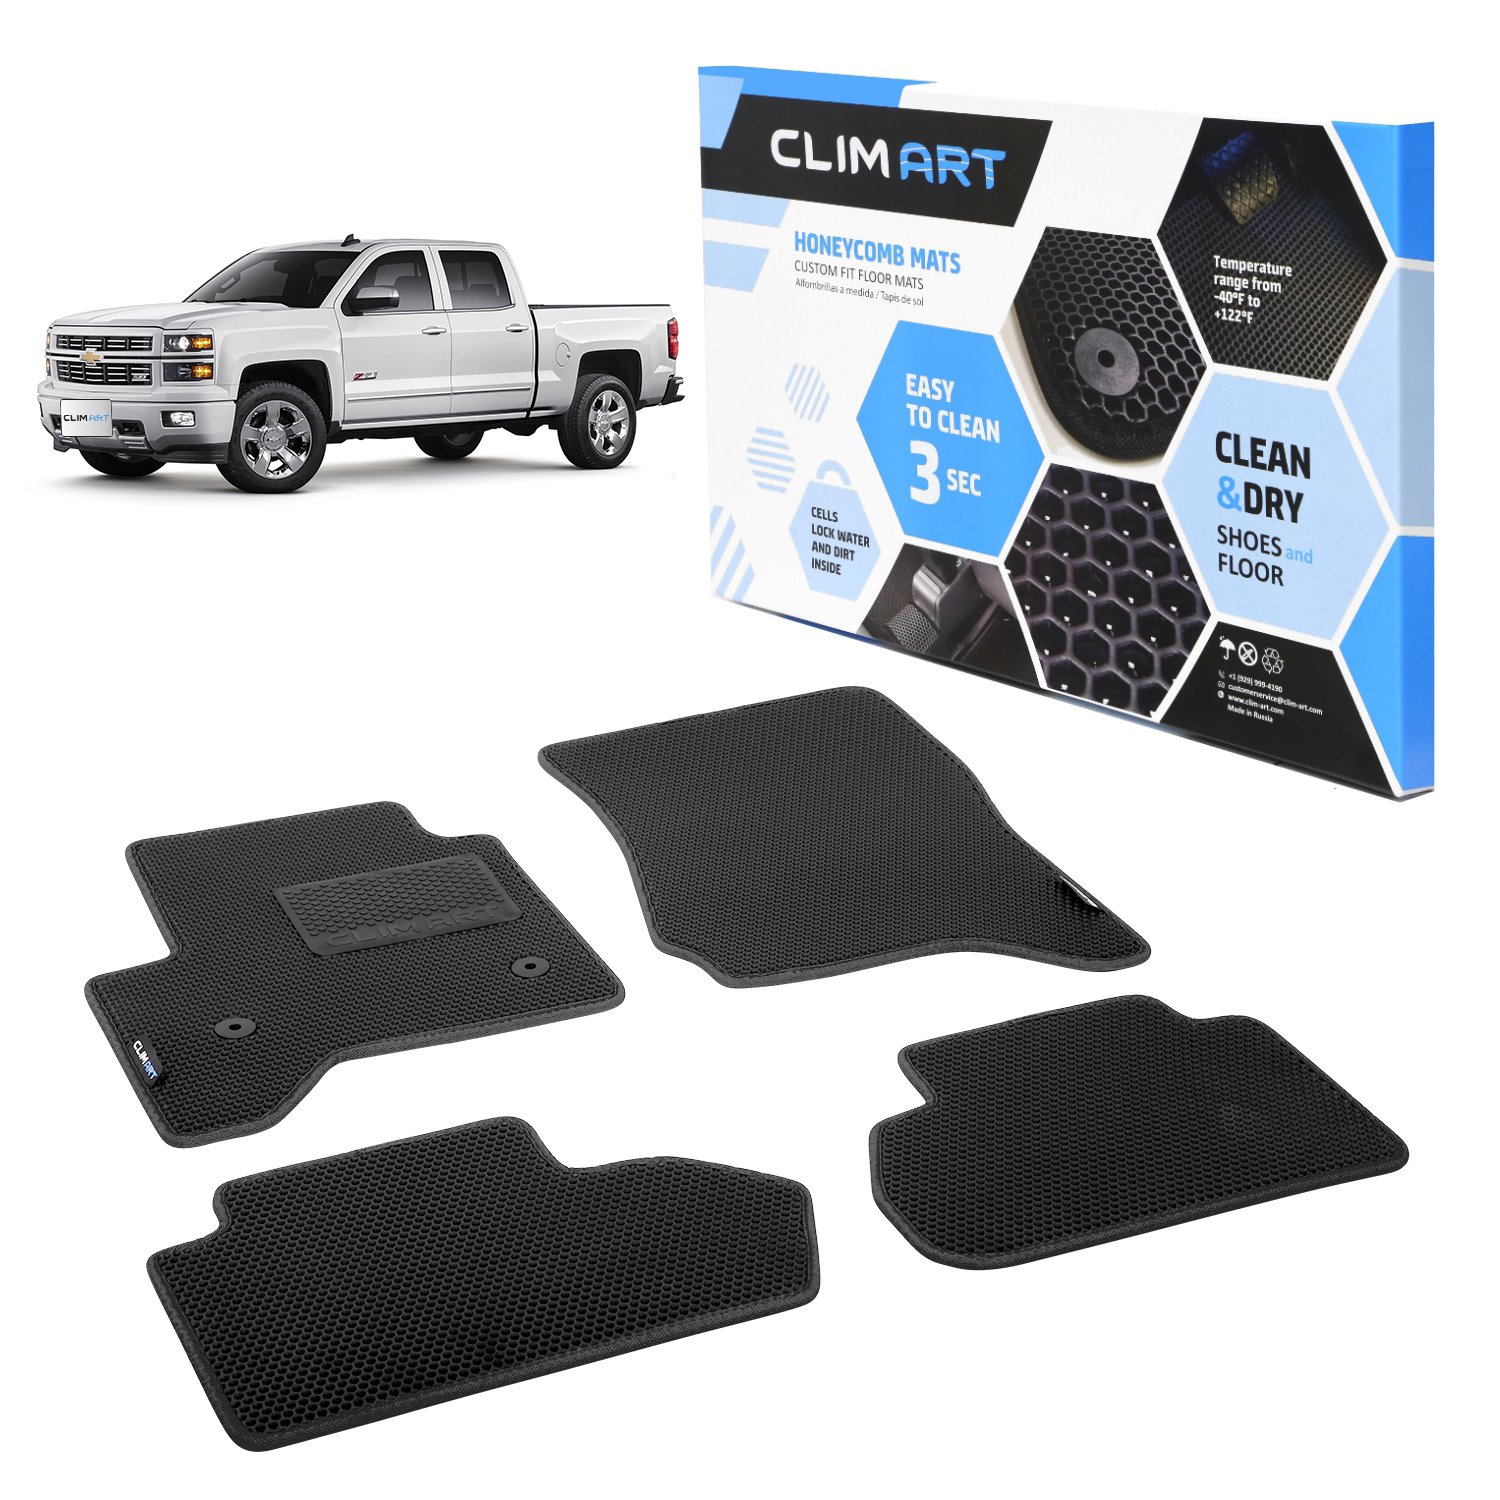 CLIM ART Honeycomb Custom Fit Floor Mats for 2014-2018 Chevrolet Silverado/GMC Sierra Double Cab